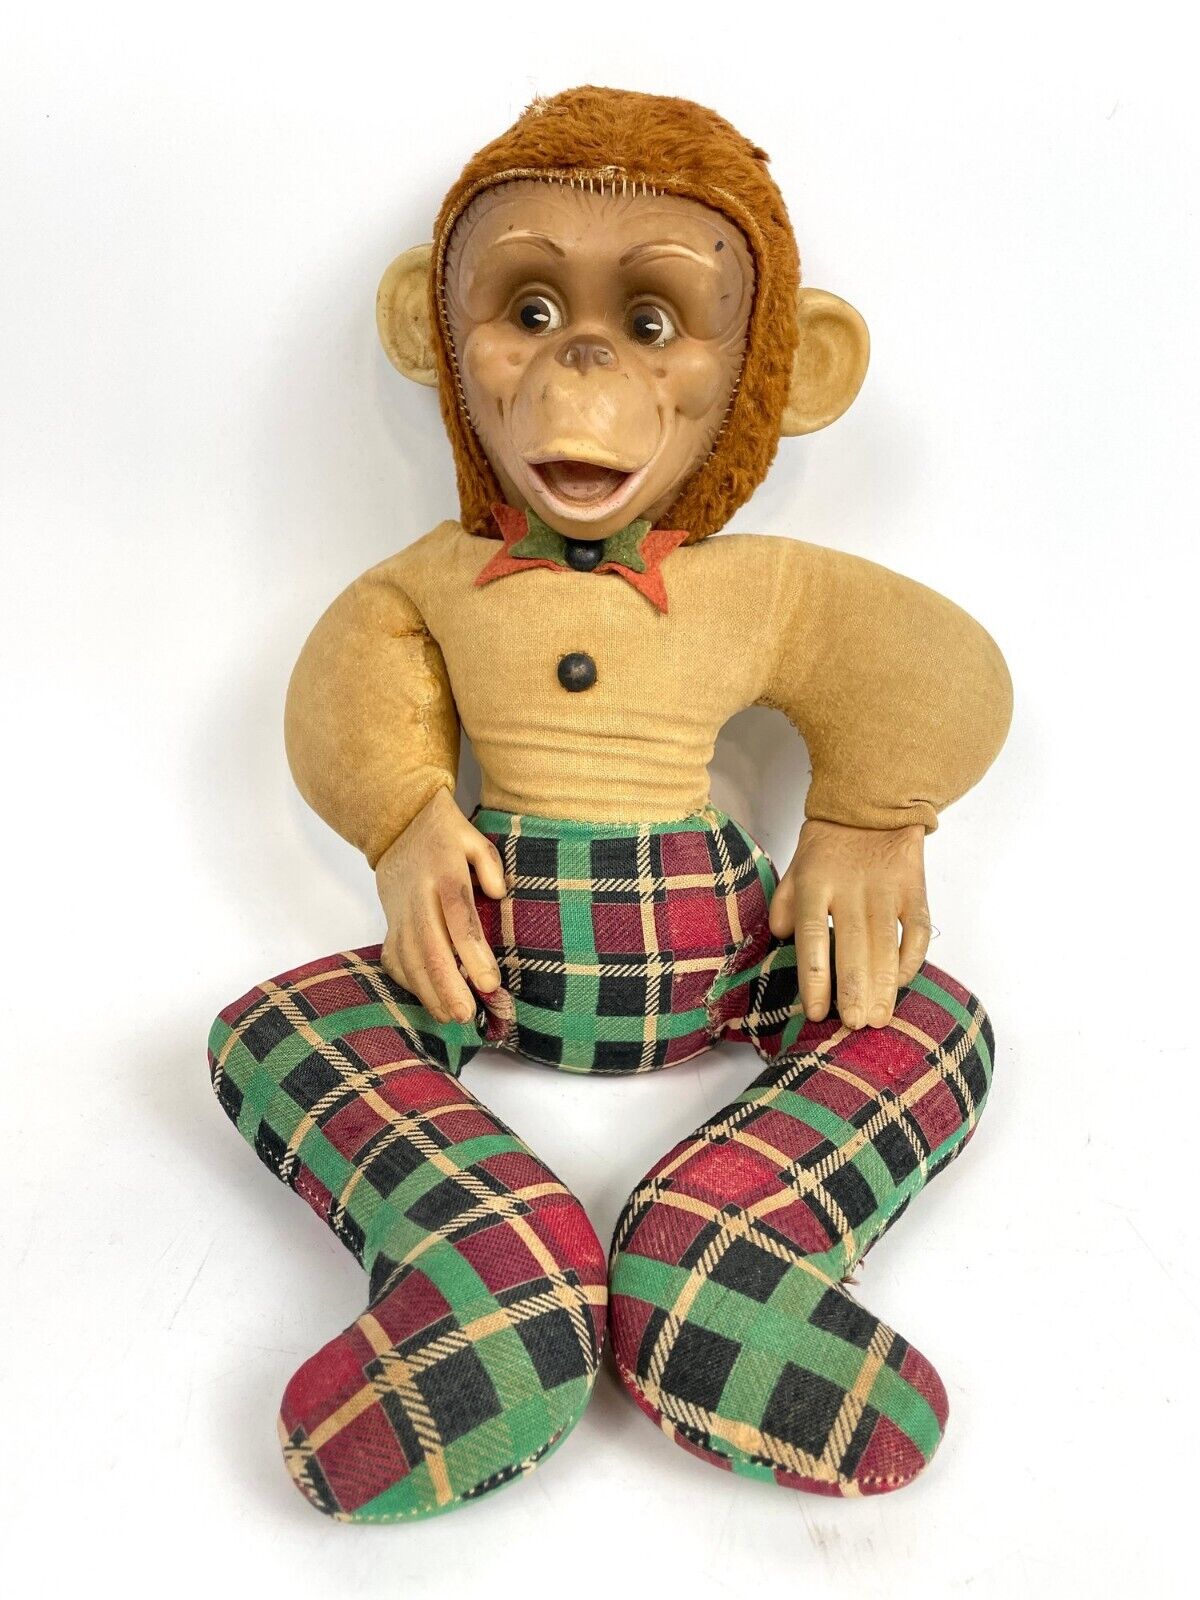 Vintage Rubber Face Monkey / Chimp Plush Stuffed Animal